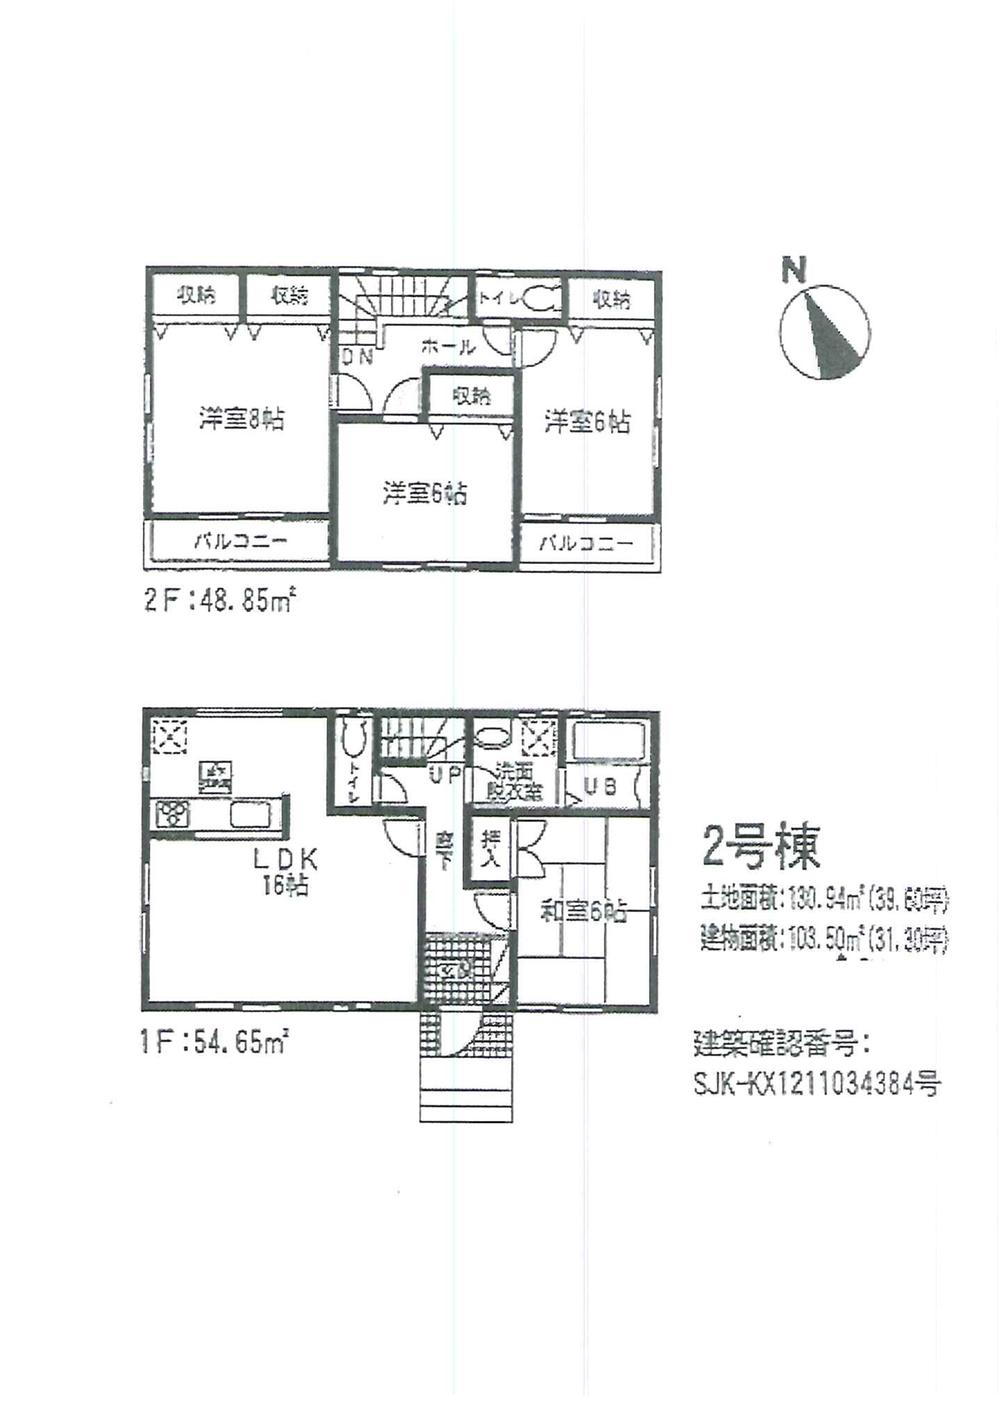 Floor plan. 24,800,000 yen, 4LDK, Land area 130.94 sq m , Building area 103.5 sq m